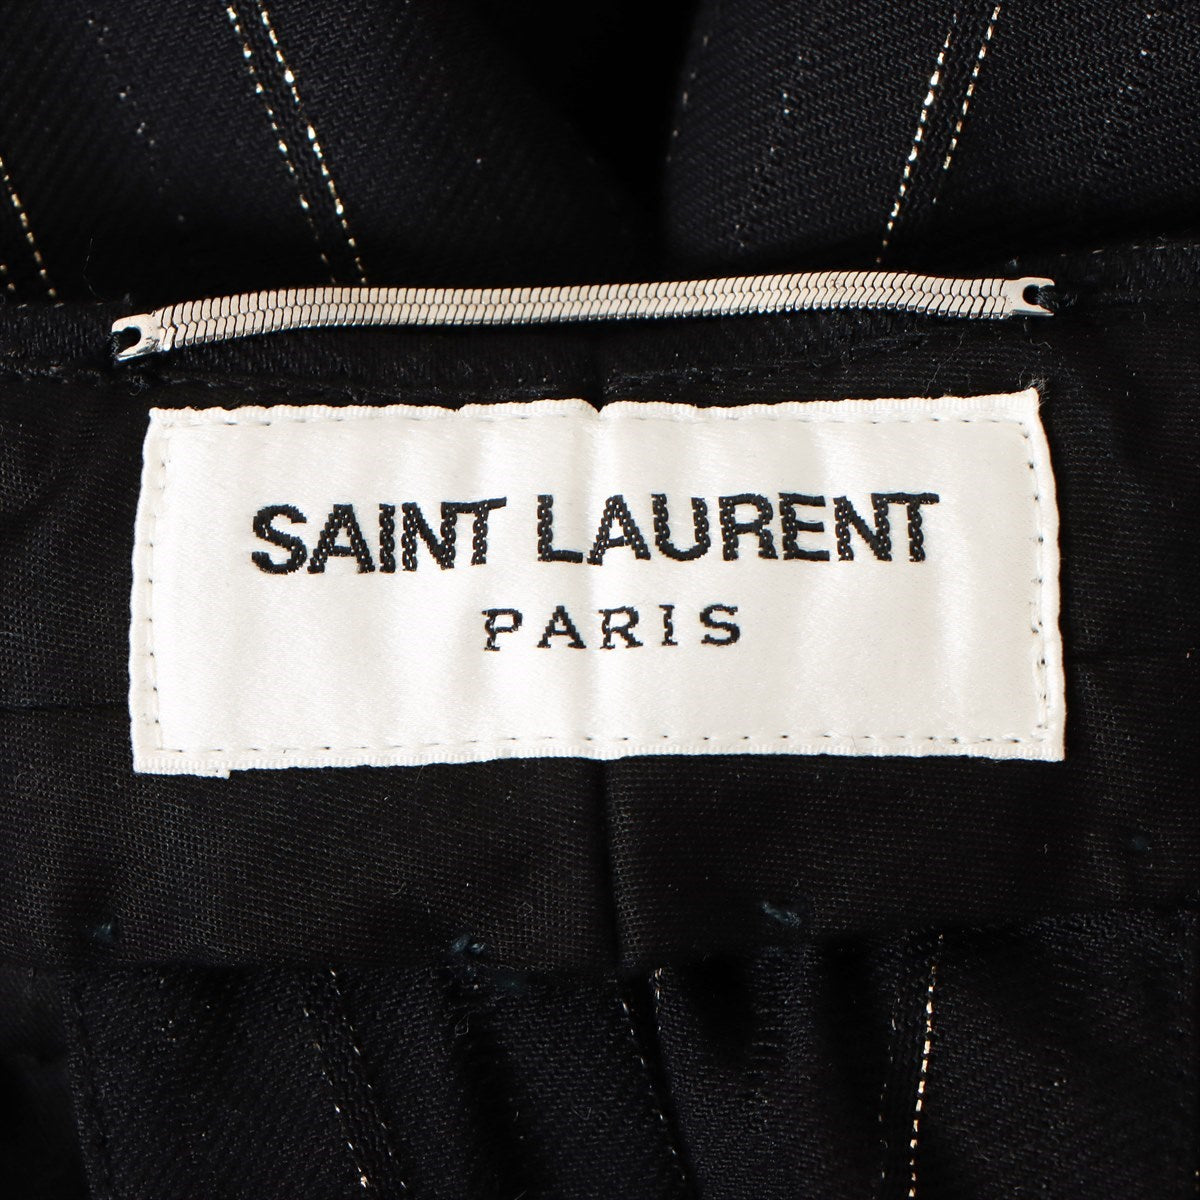 Saint Laurent Paris 21 years wool x rayon Slacks 46 Men's Black  stripes 682379 There is a thread twist